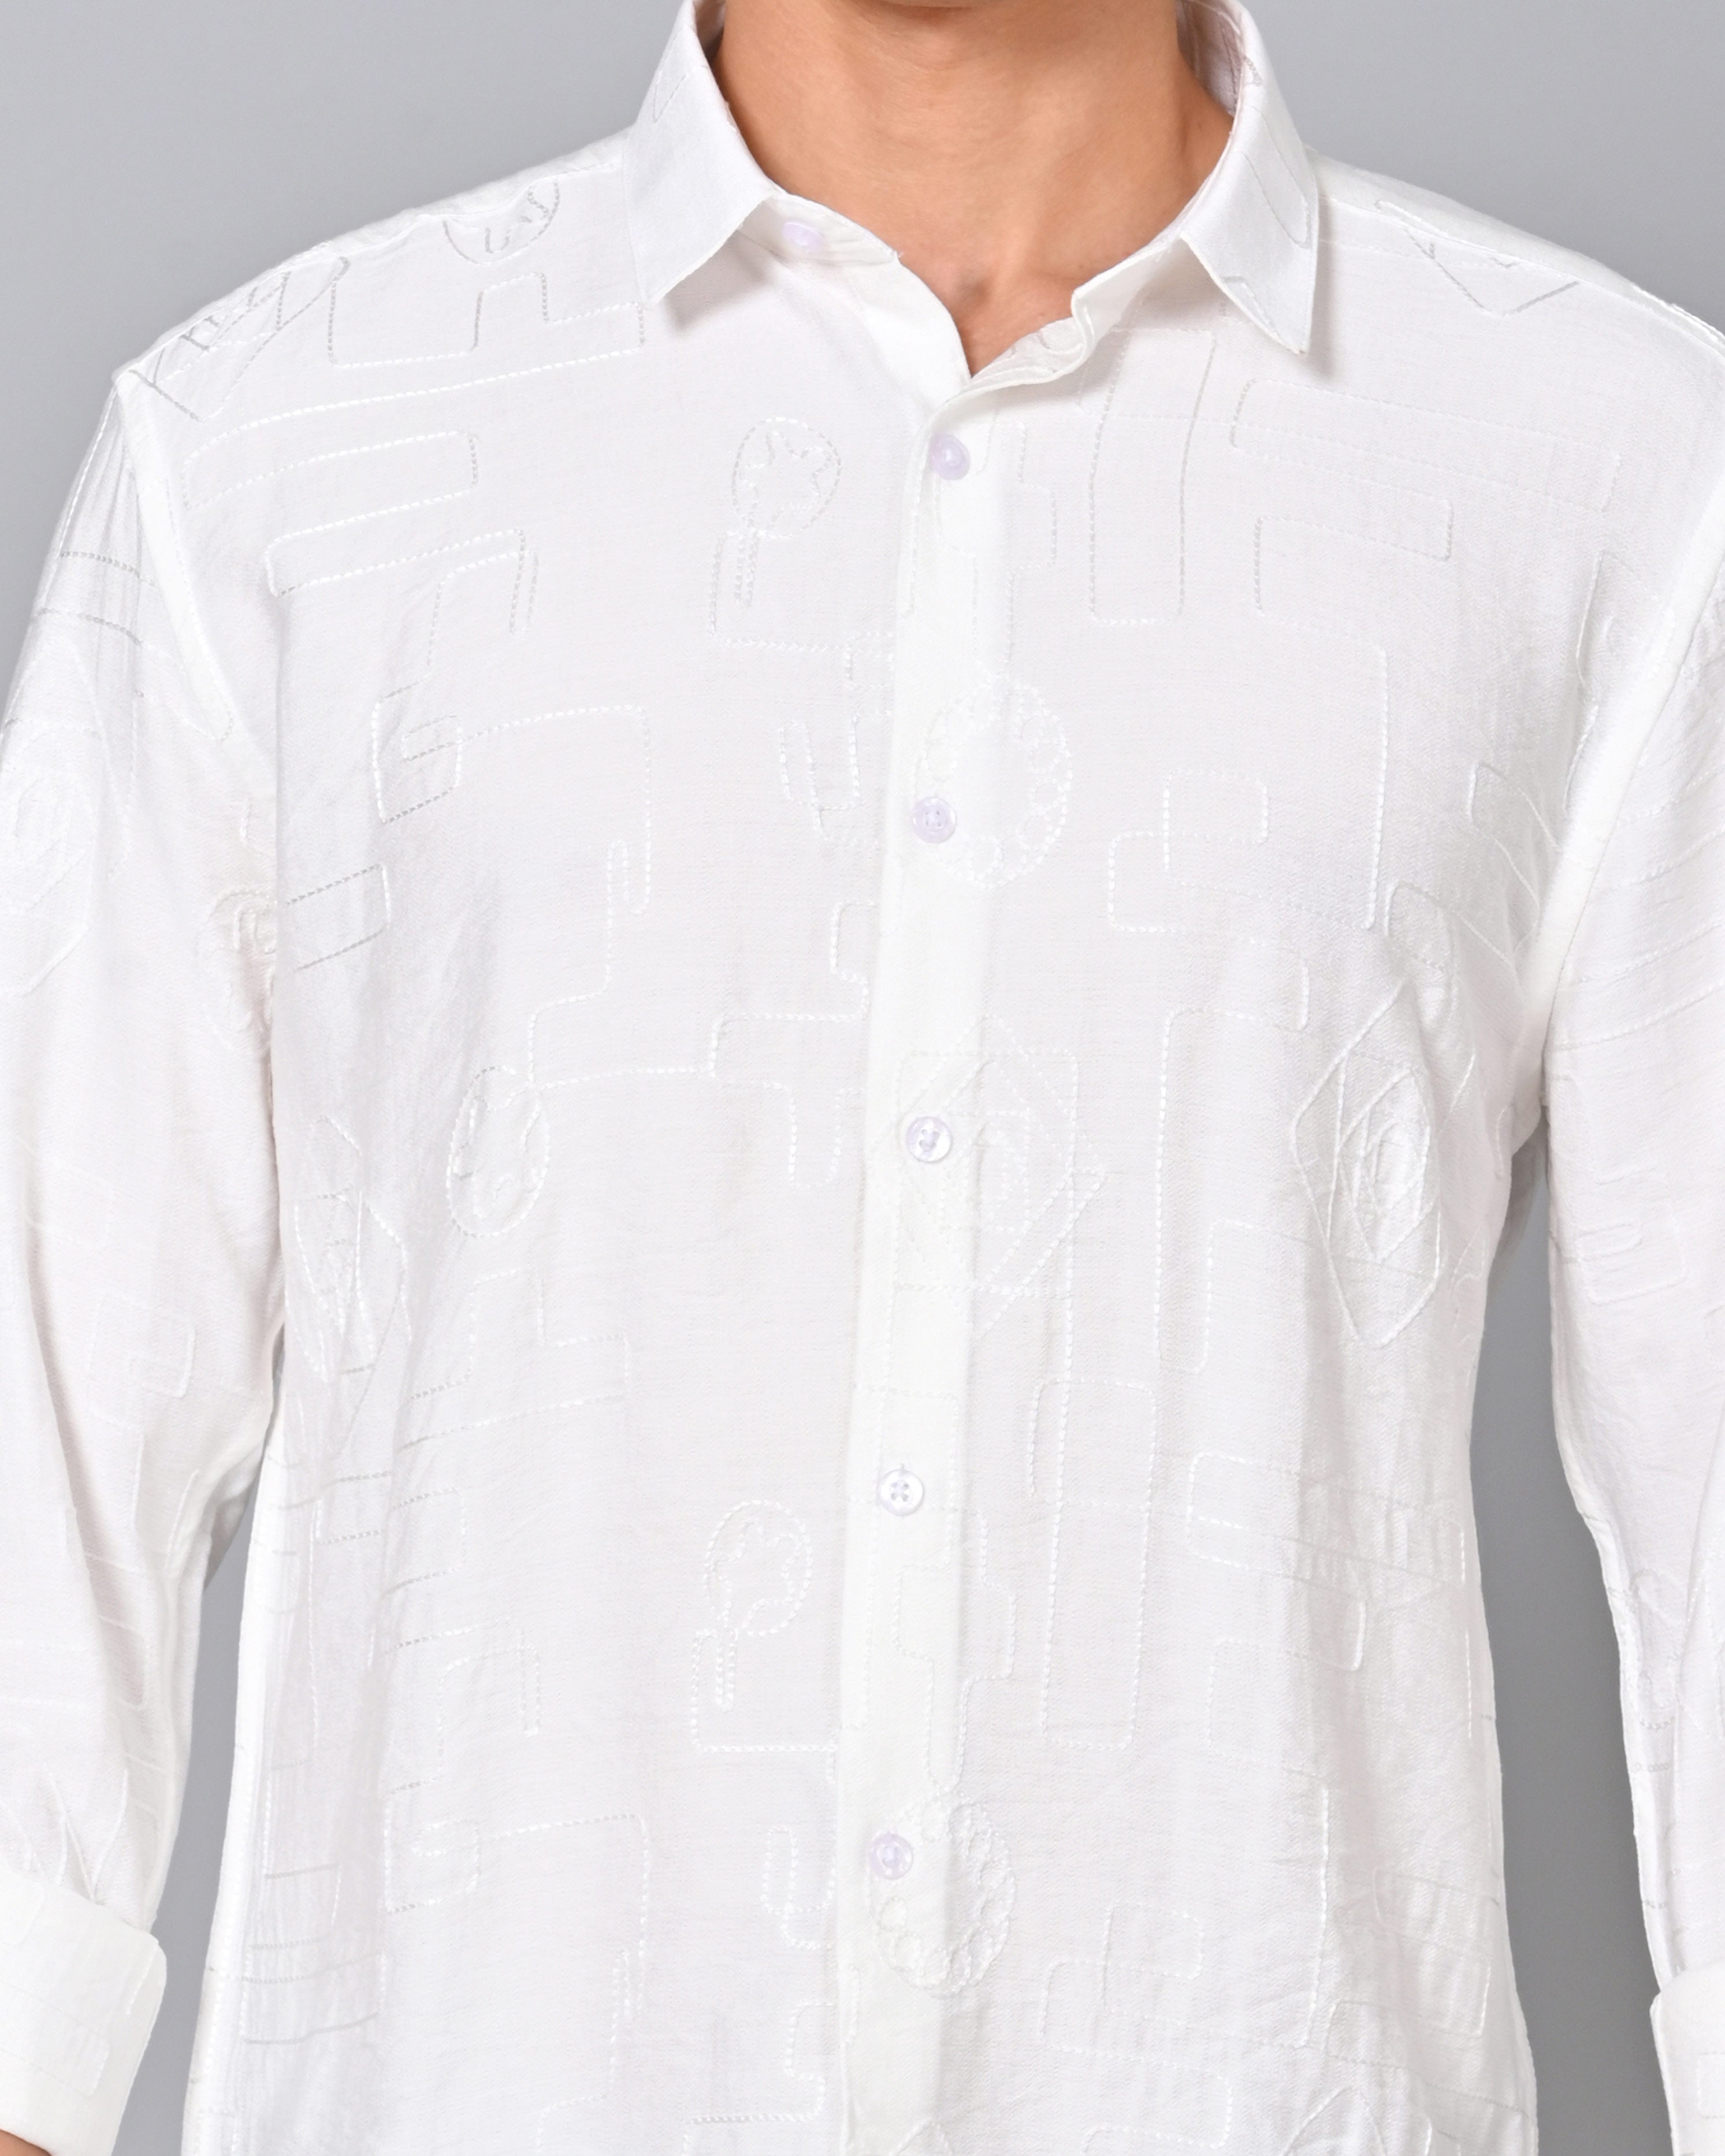 Shop Men's Embroidered Full Sleeve White Shirt